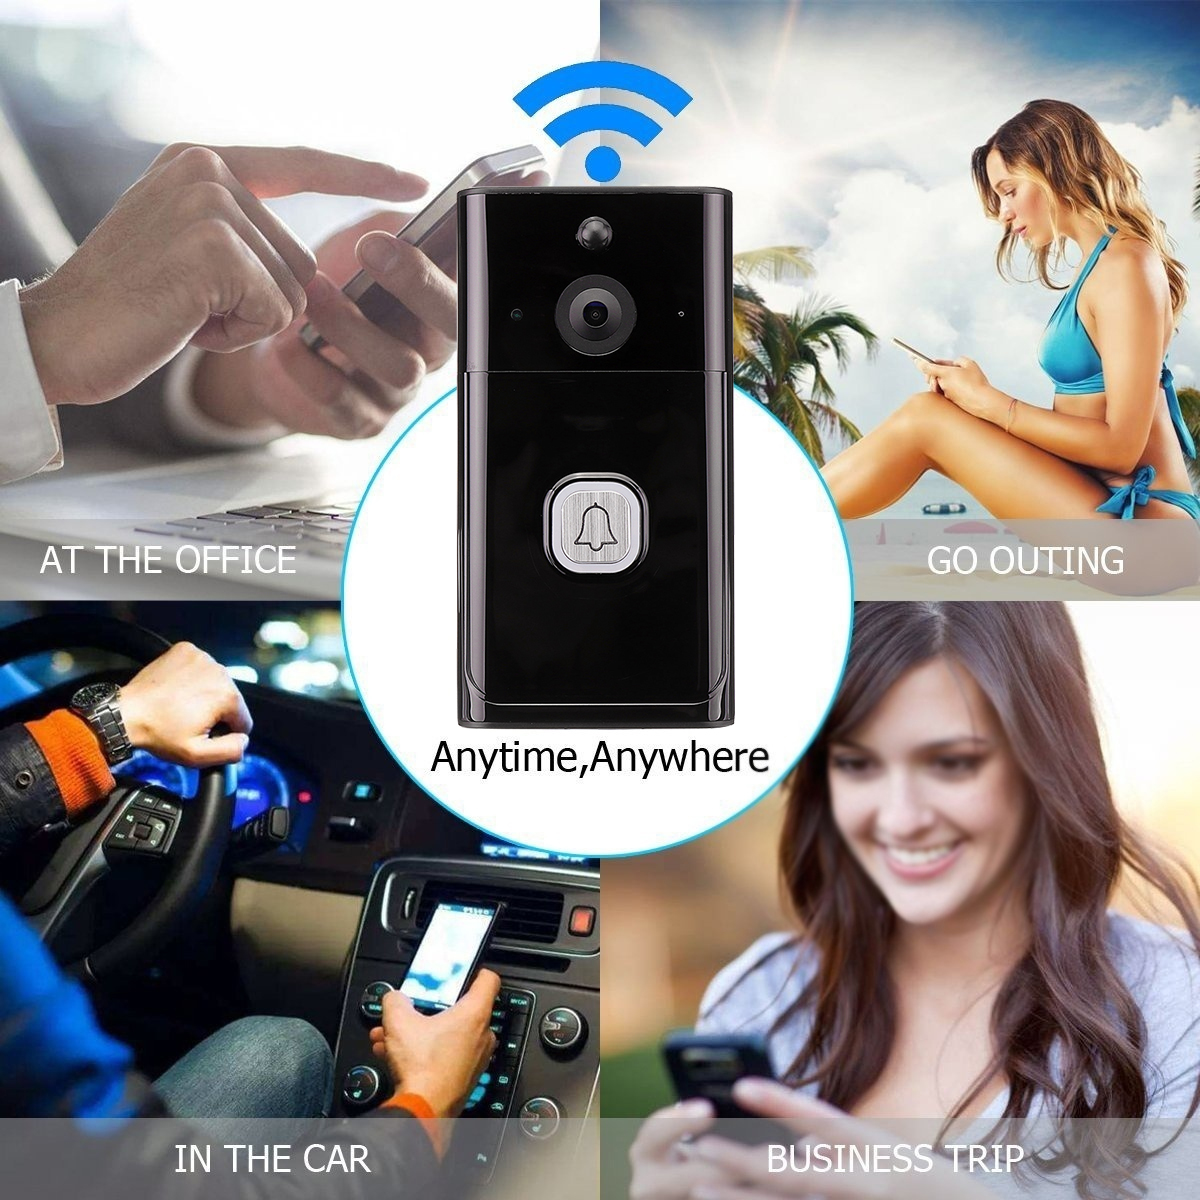 Wireless WiFi Video Doorbell Rainproof Smartphone Remote Video Camera Security Two Way Talk 166°